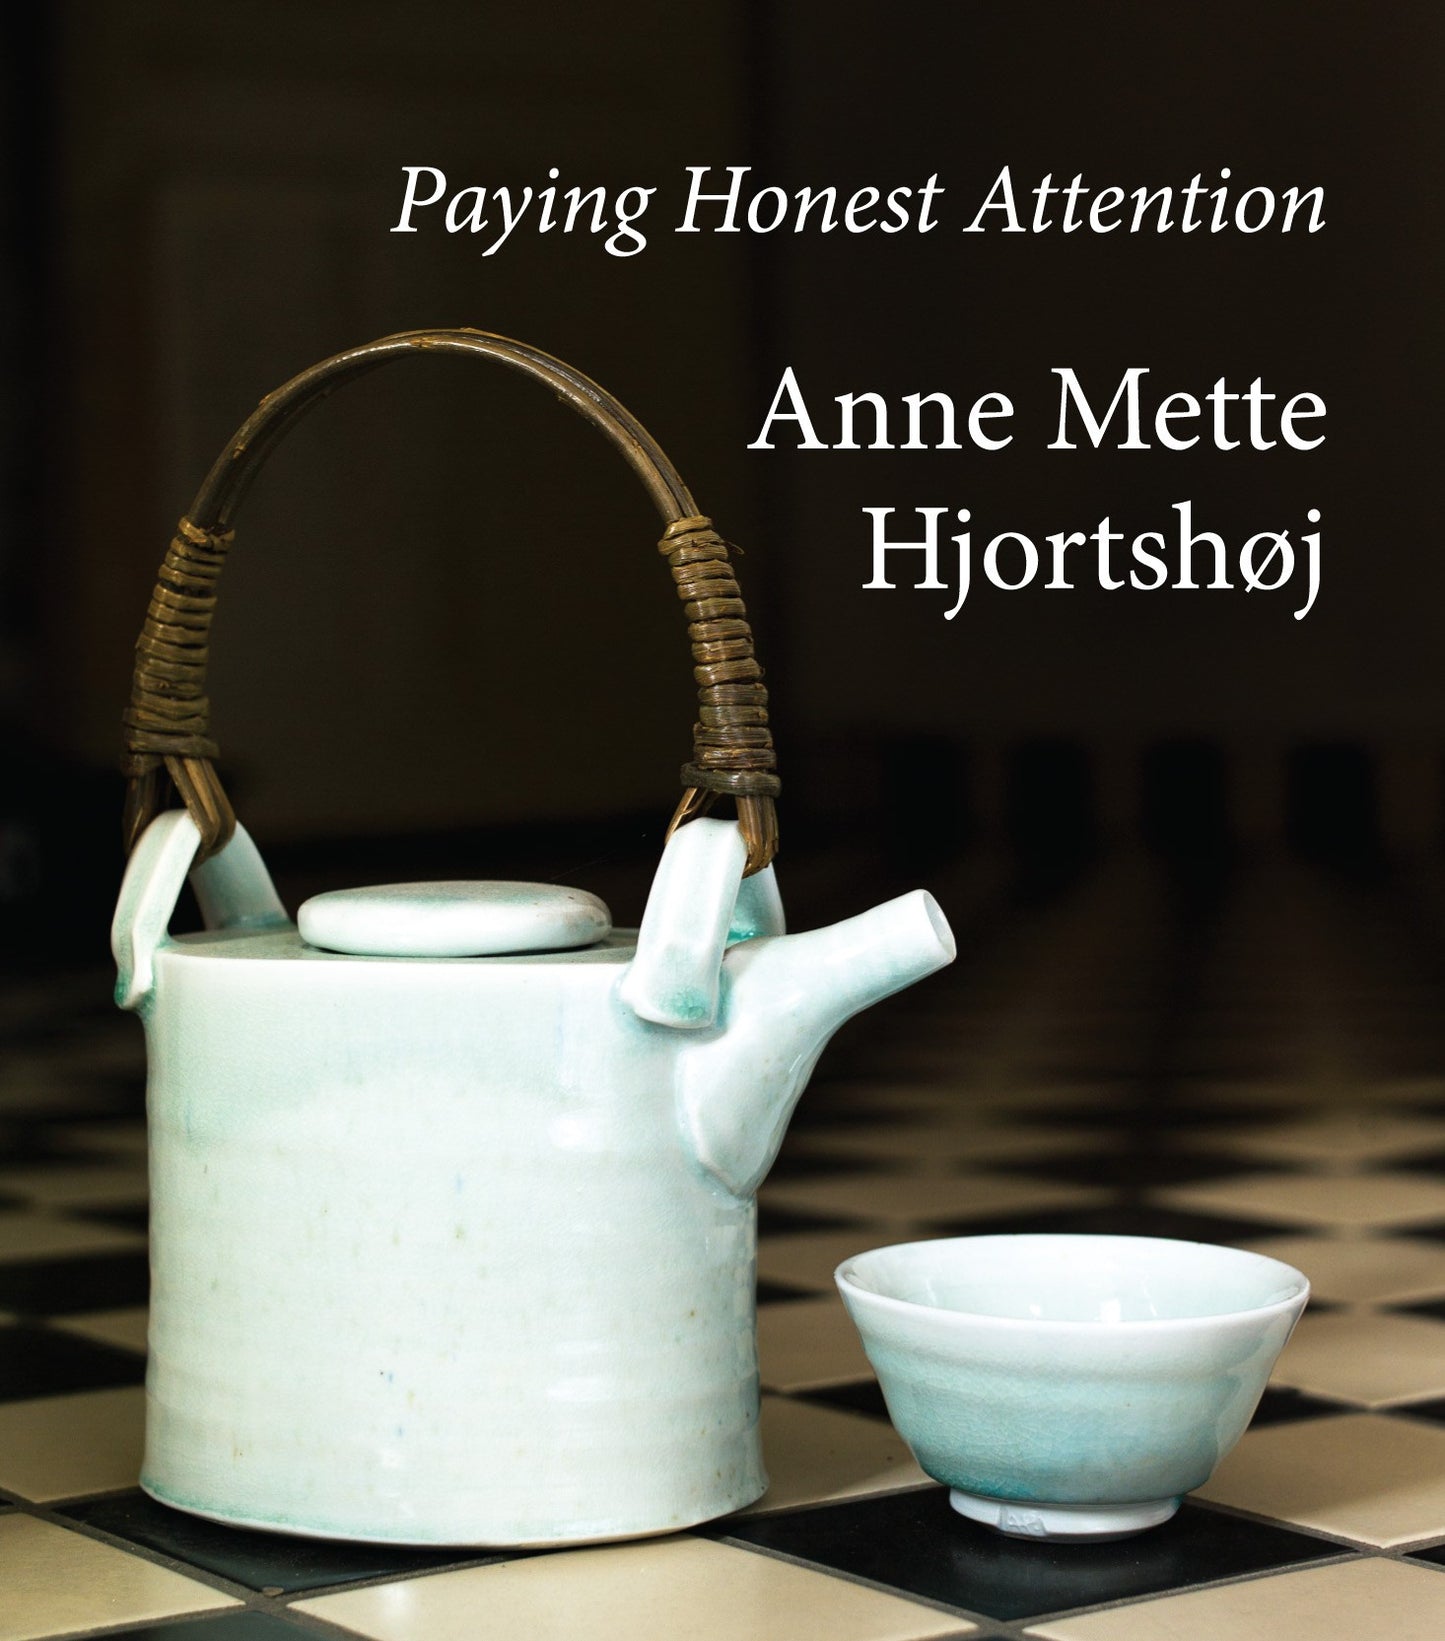 Anne Mette Hjortshøj - Paying Honest Attention